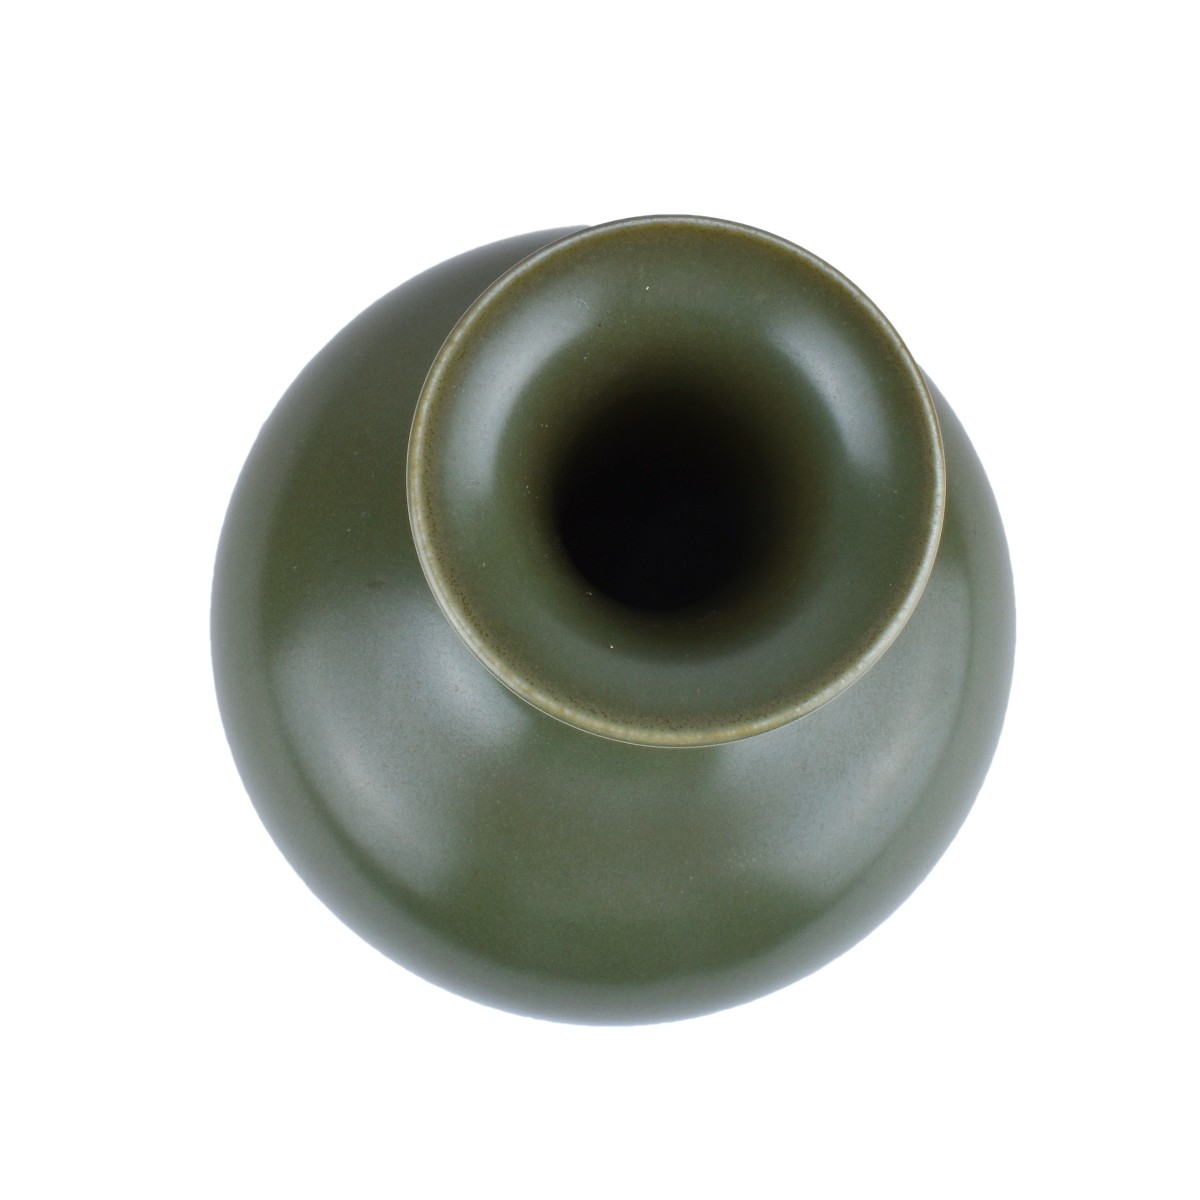 Chinese Green Celadon Glaze Porcelain Vase